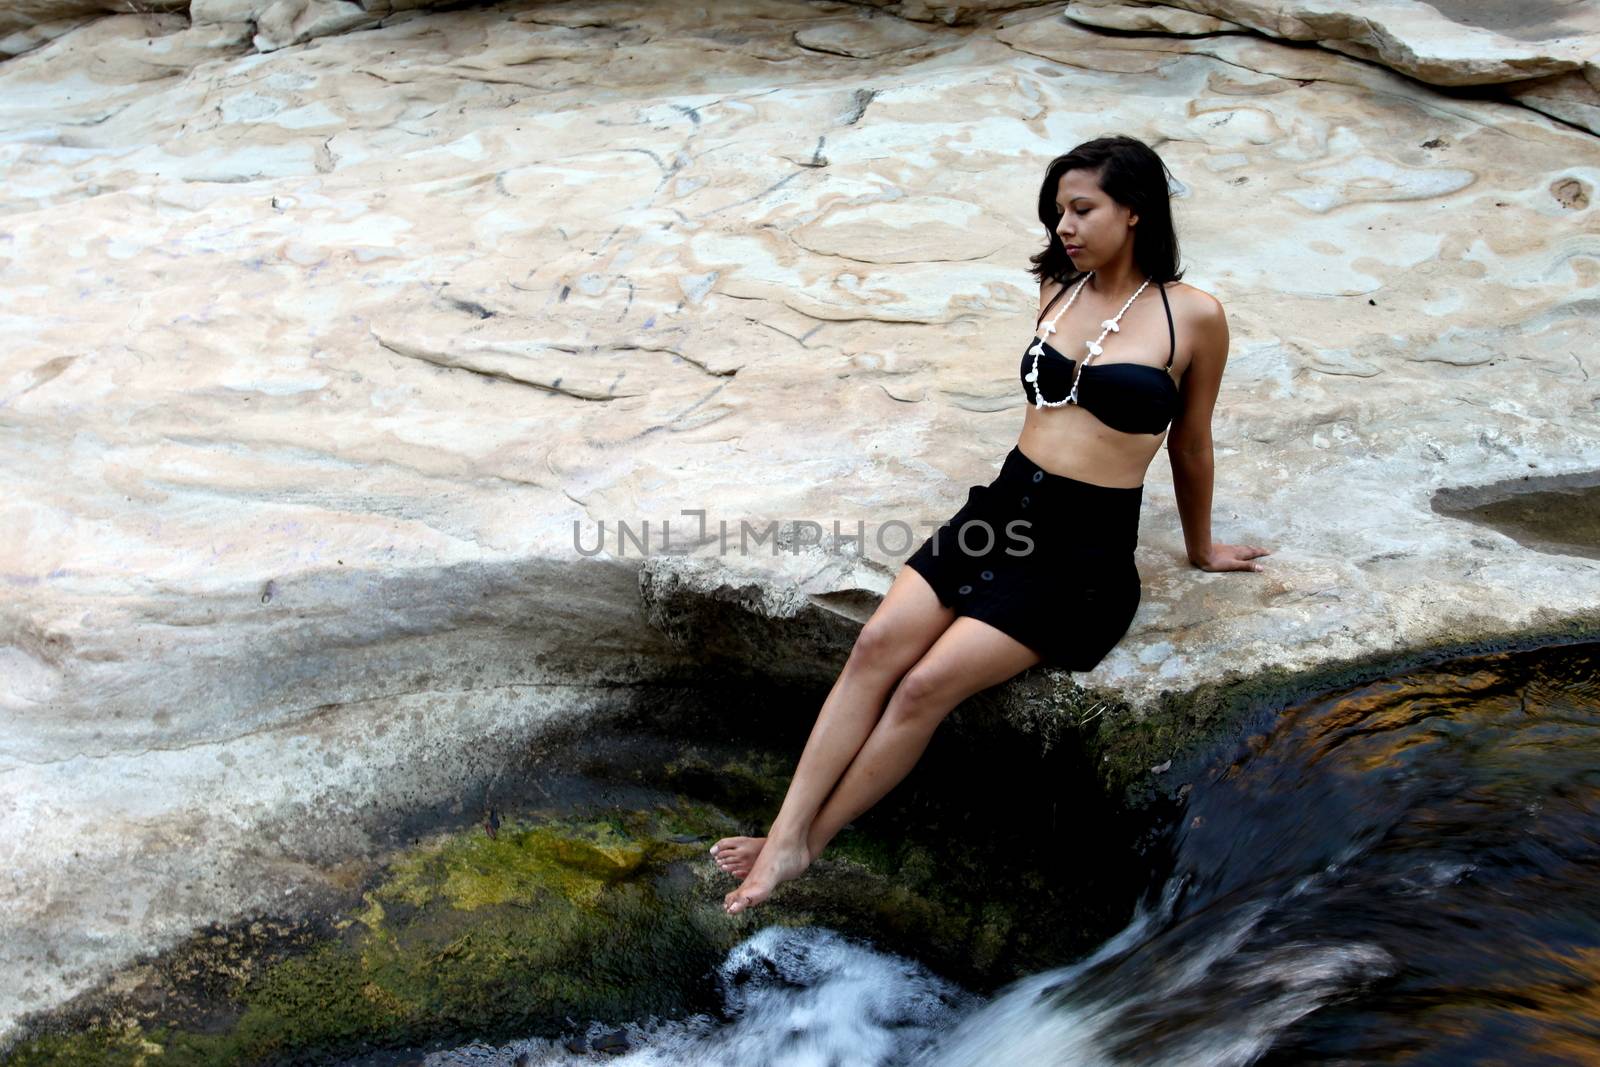 Hispanic woman with bikini lying next to a waterfall.